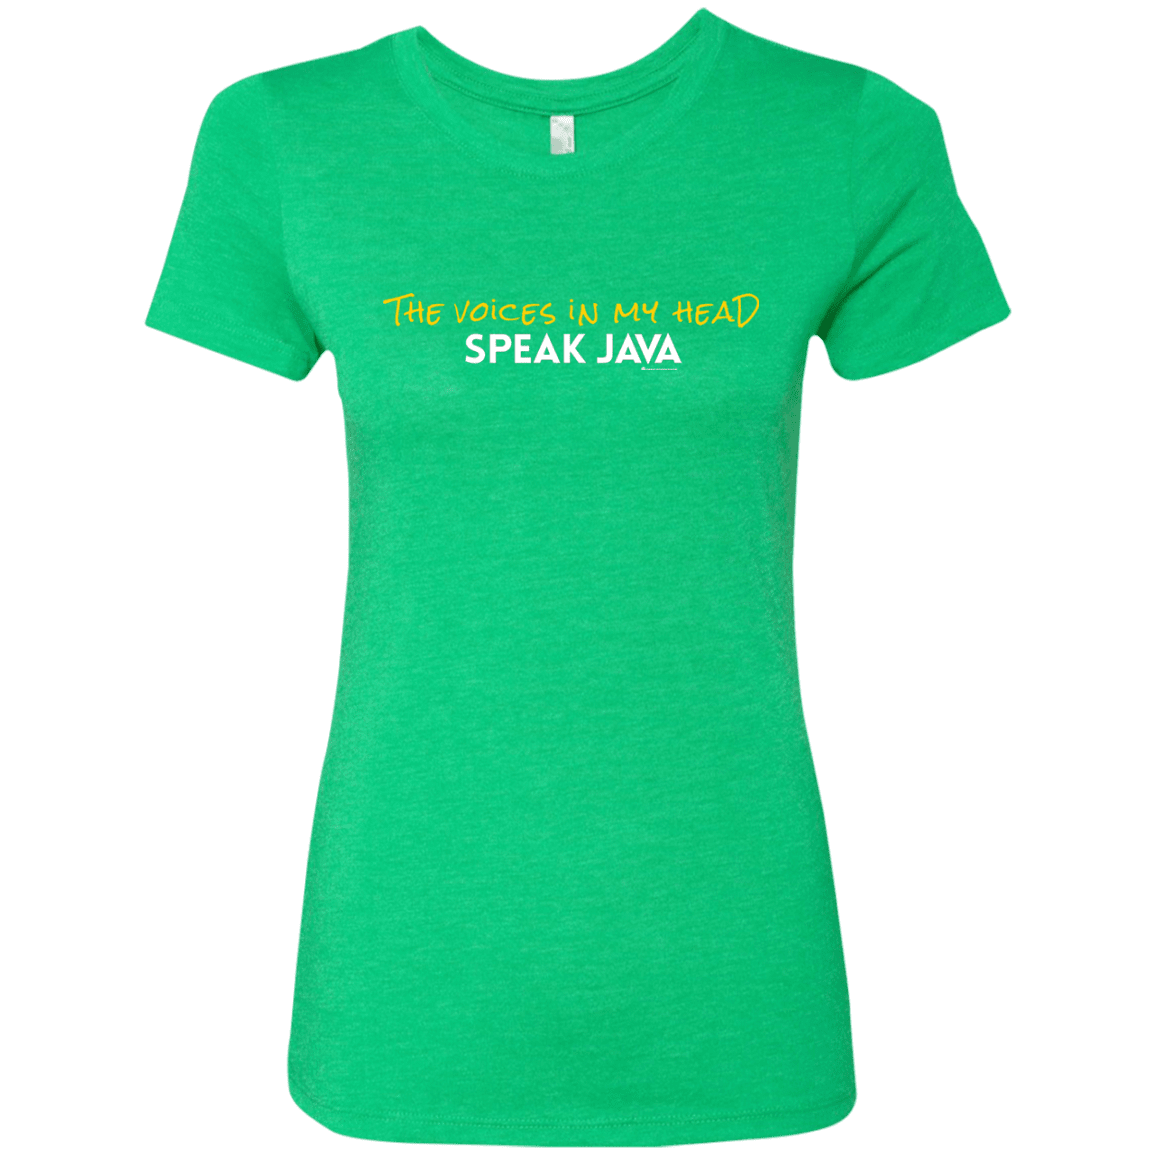 The Voices In My Head Speak Java Women's Triblend T-Shirt